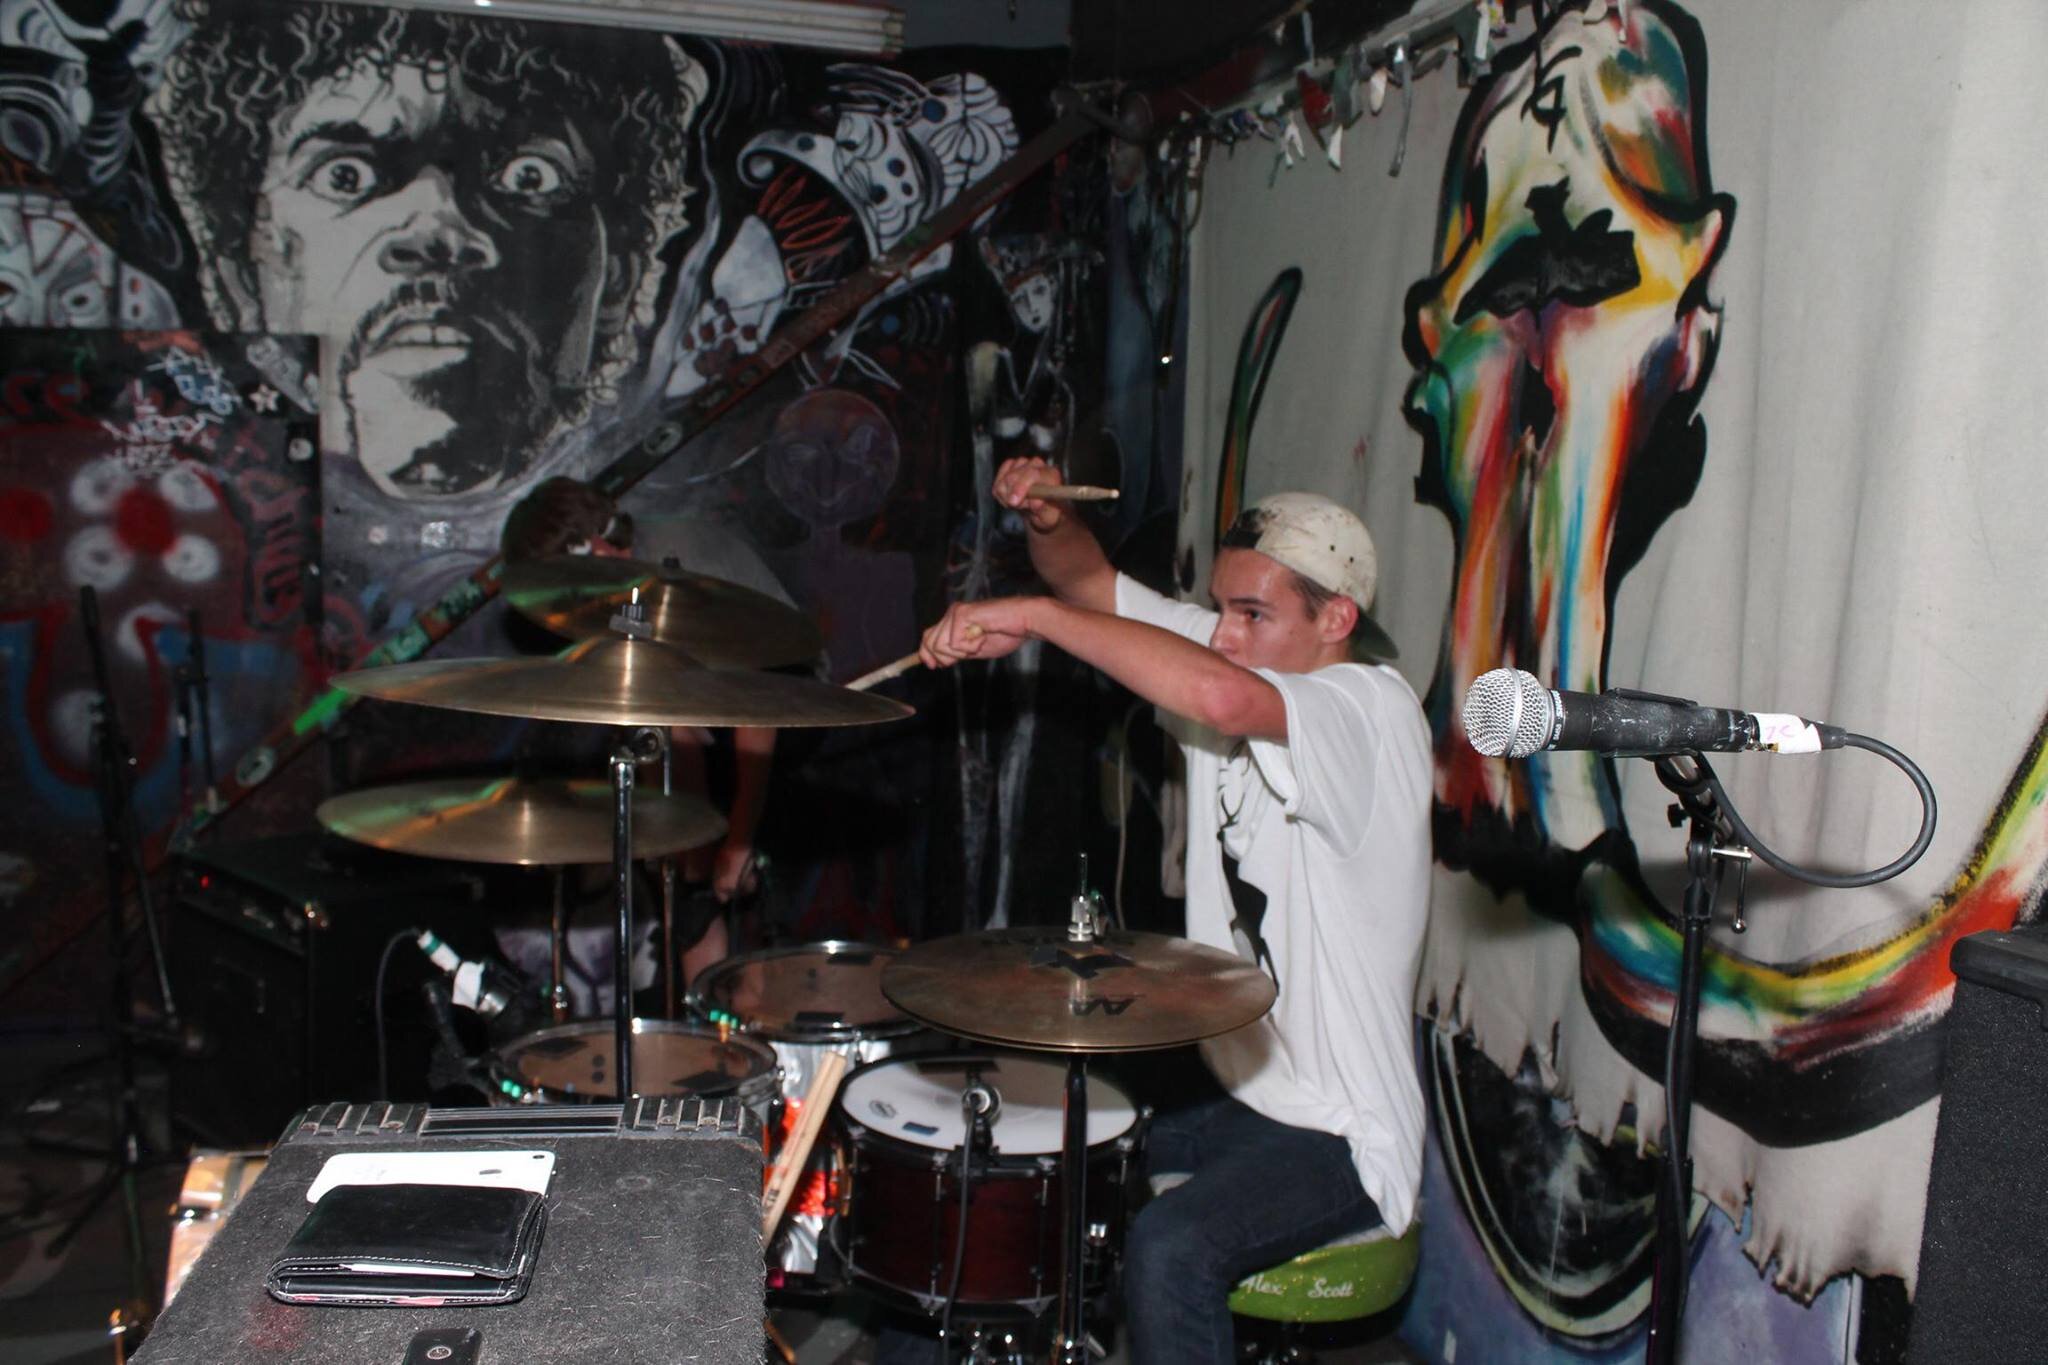 Jared on drums